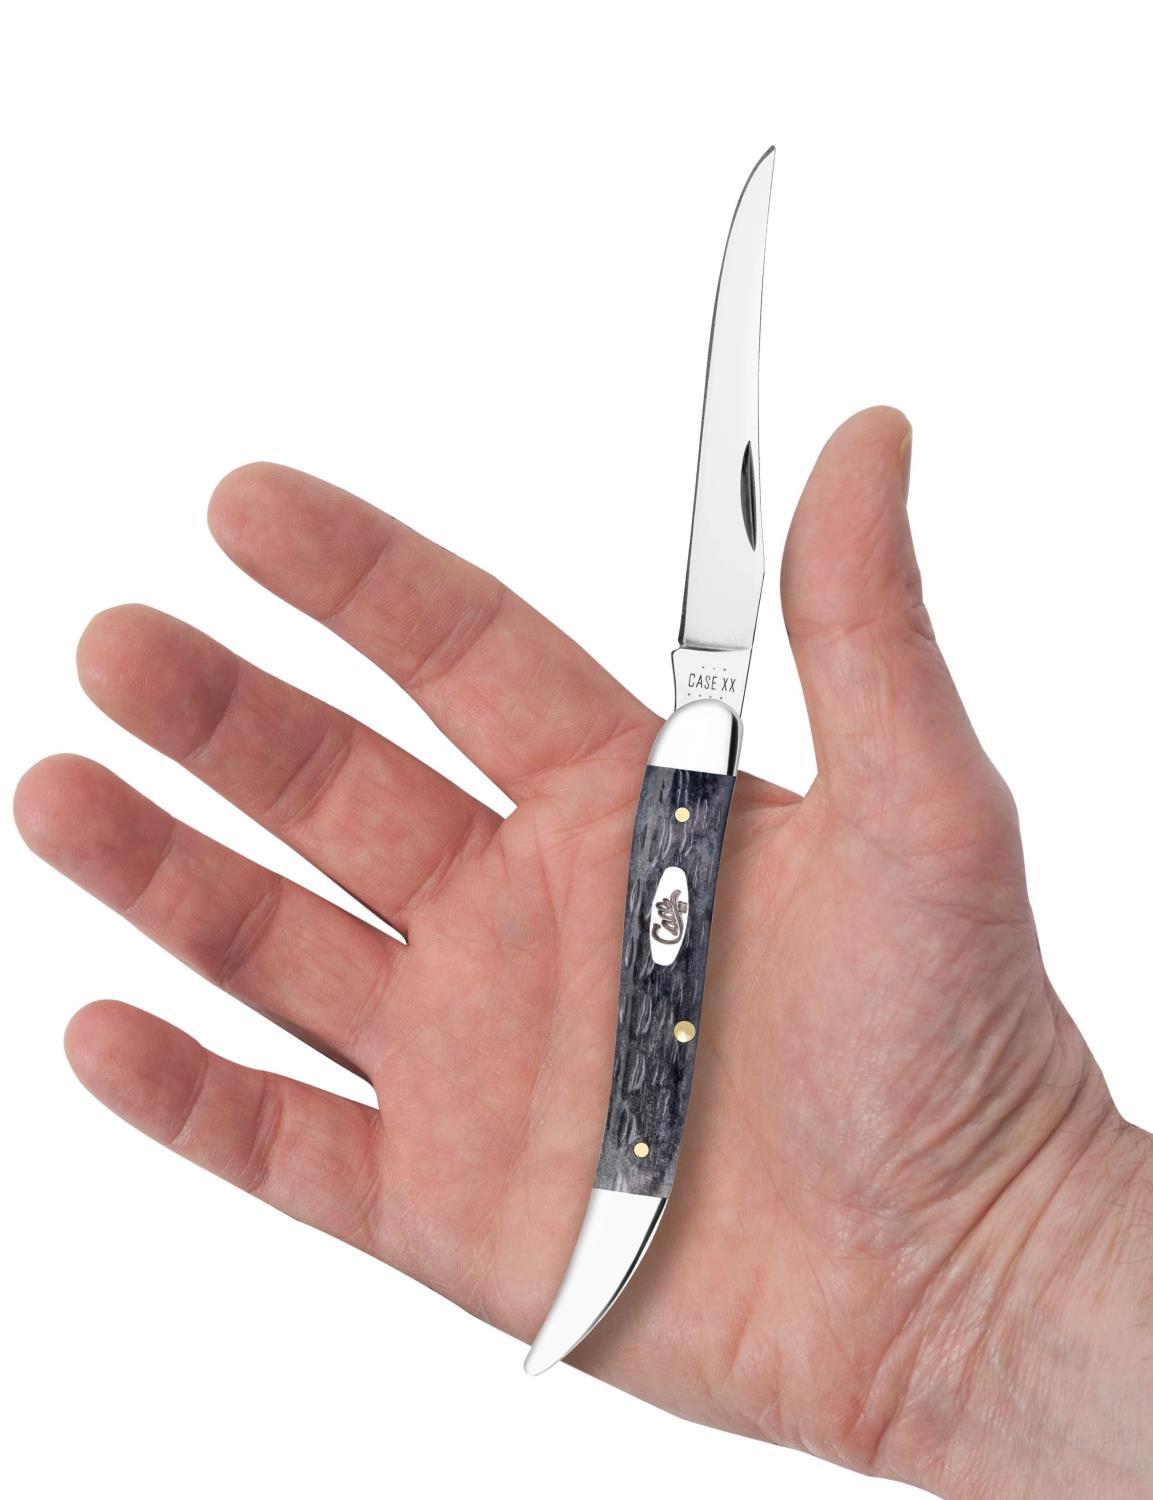 CASE POCKET KNIFE 58421 GRAY BONE TOOTHPICK